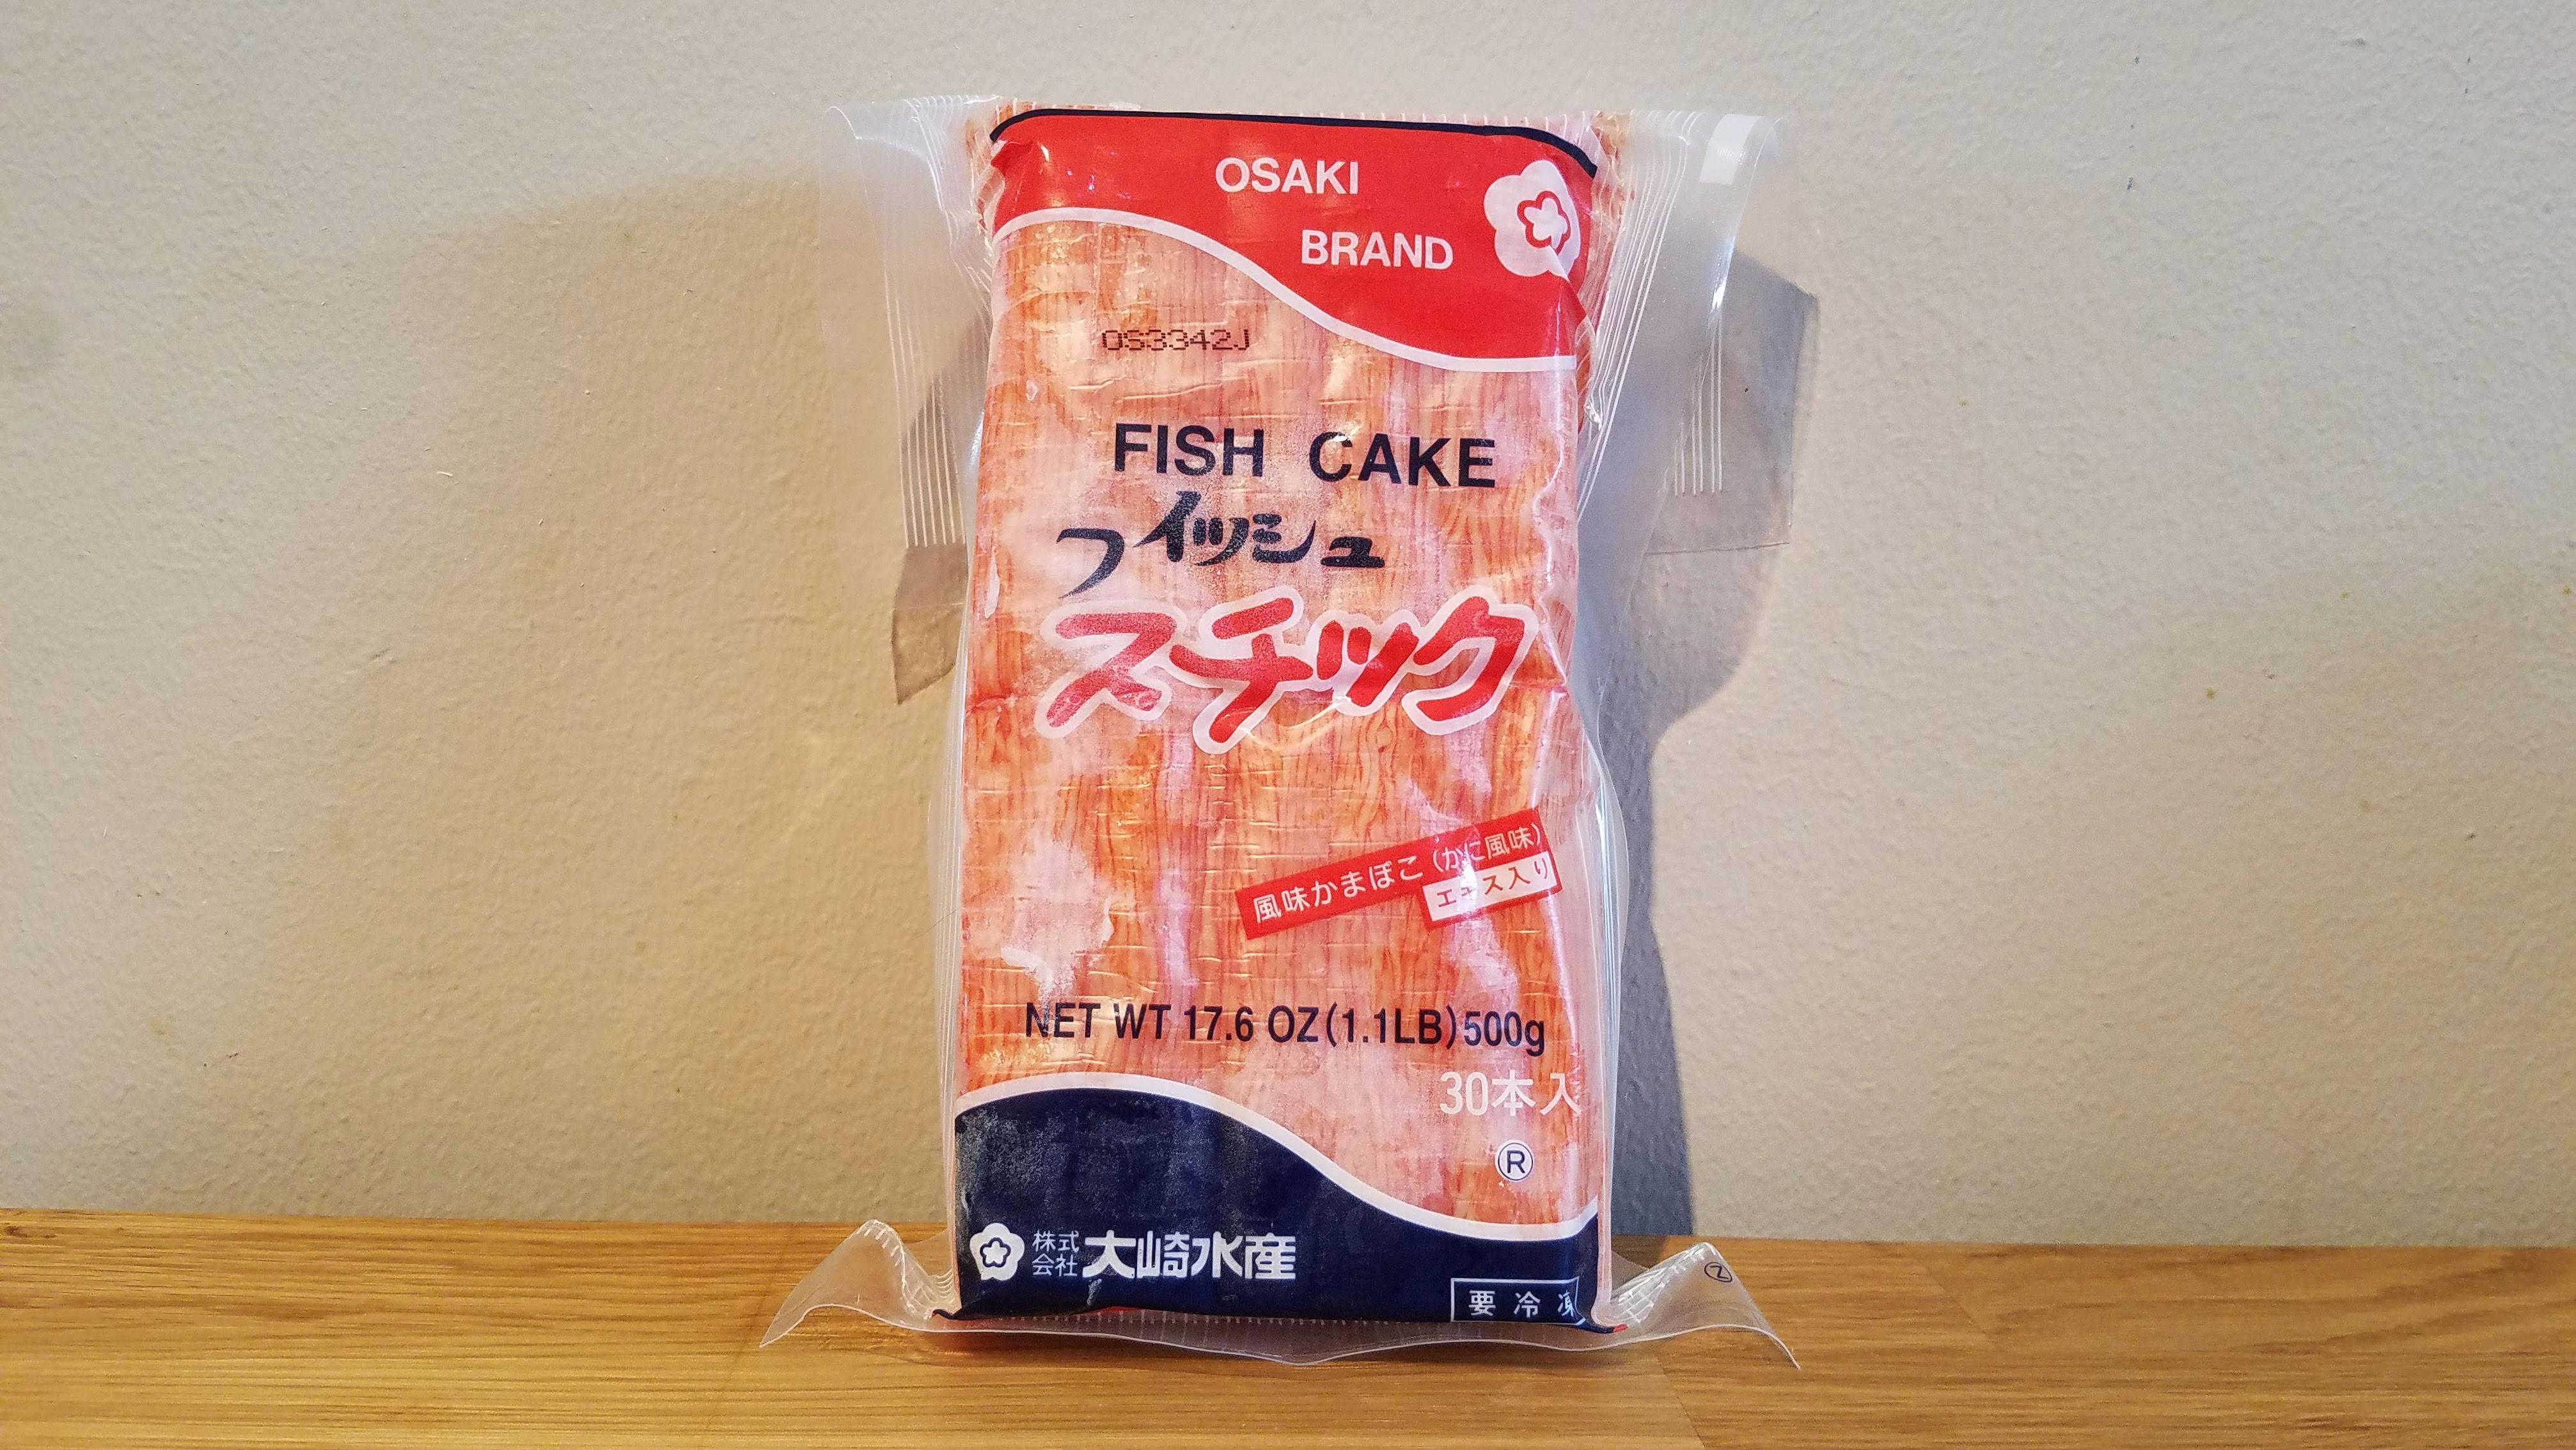 Package of Osaki brand Fish Cake imitation crab 